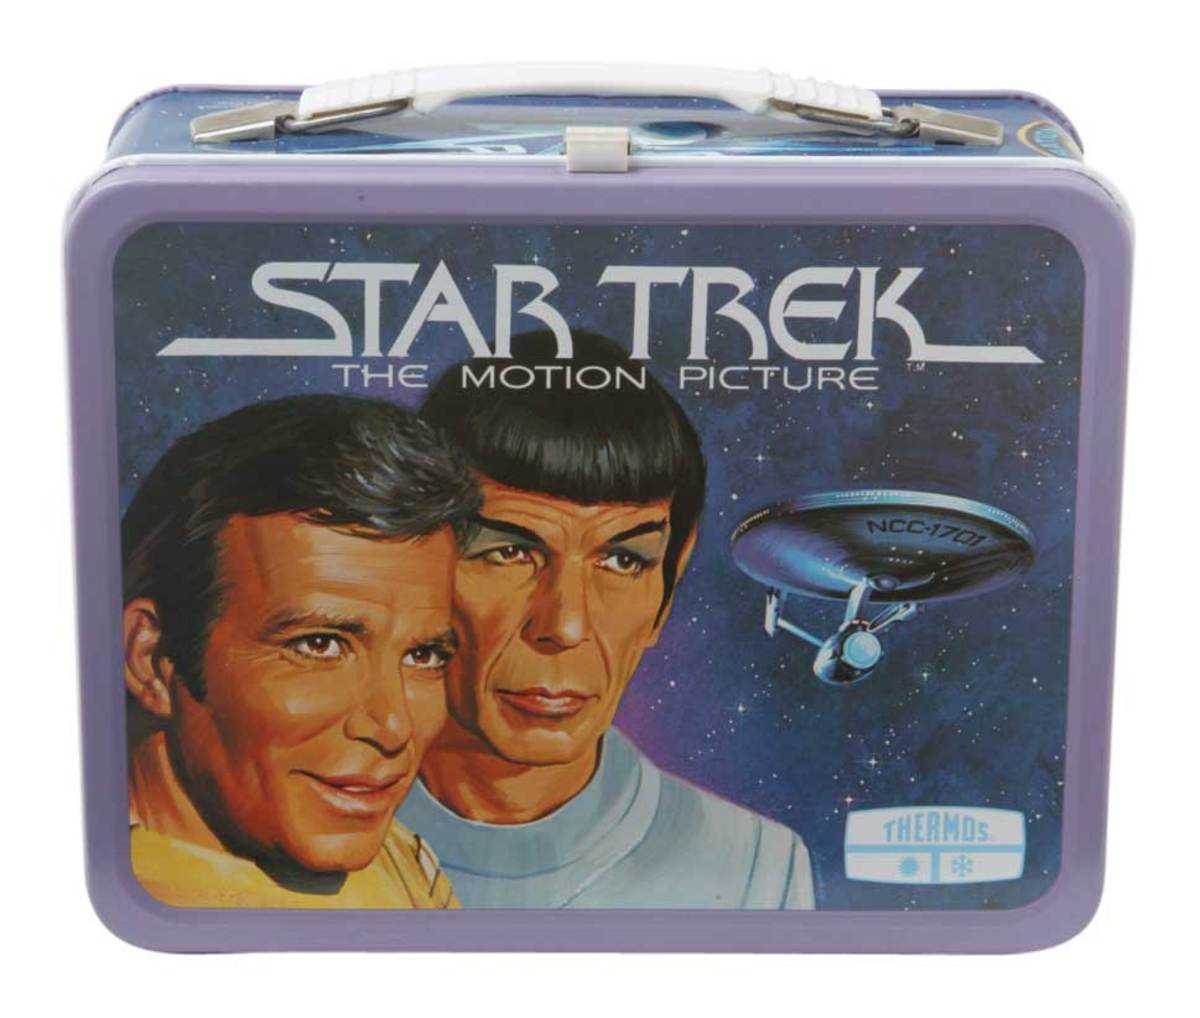 Star Trek lunch box 1980